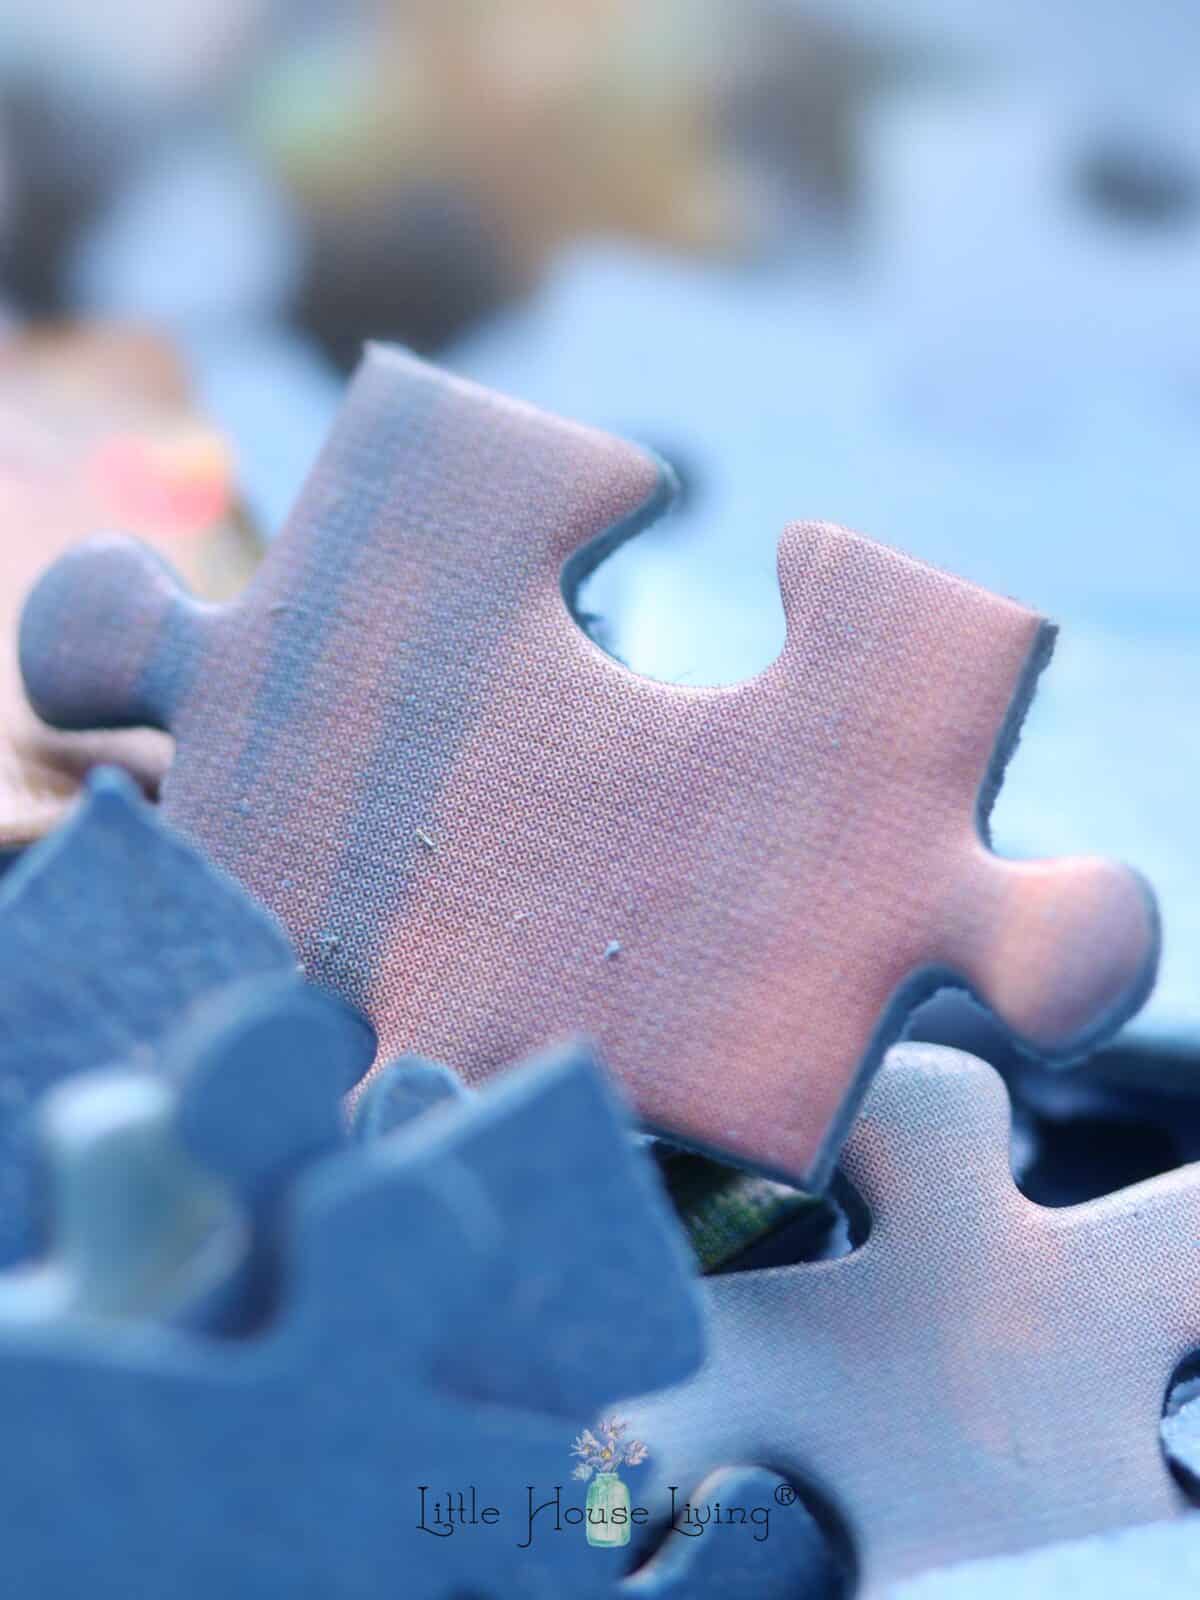 Puzzle pieces.